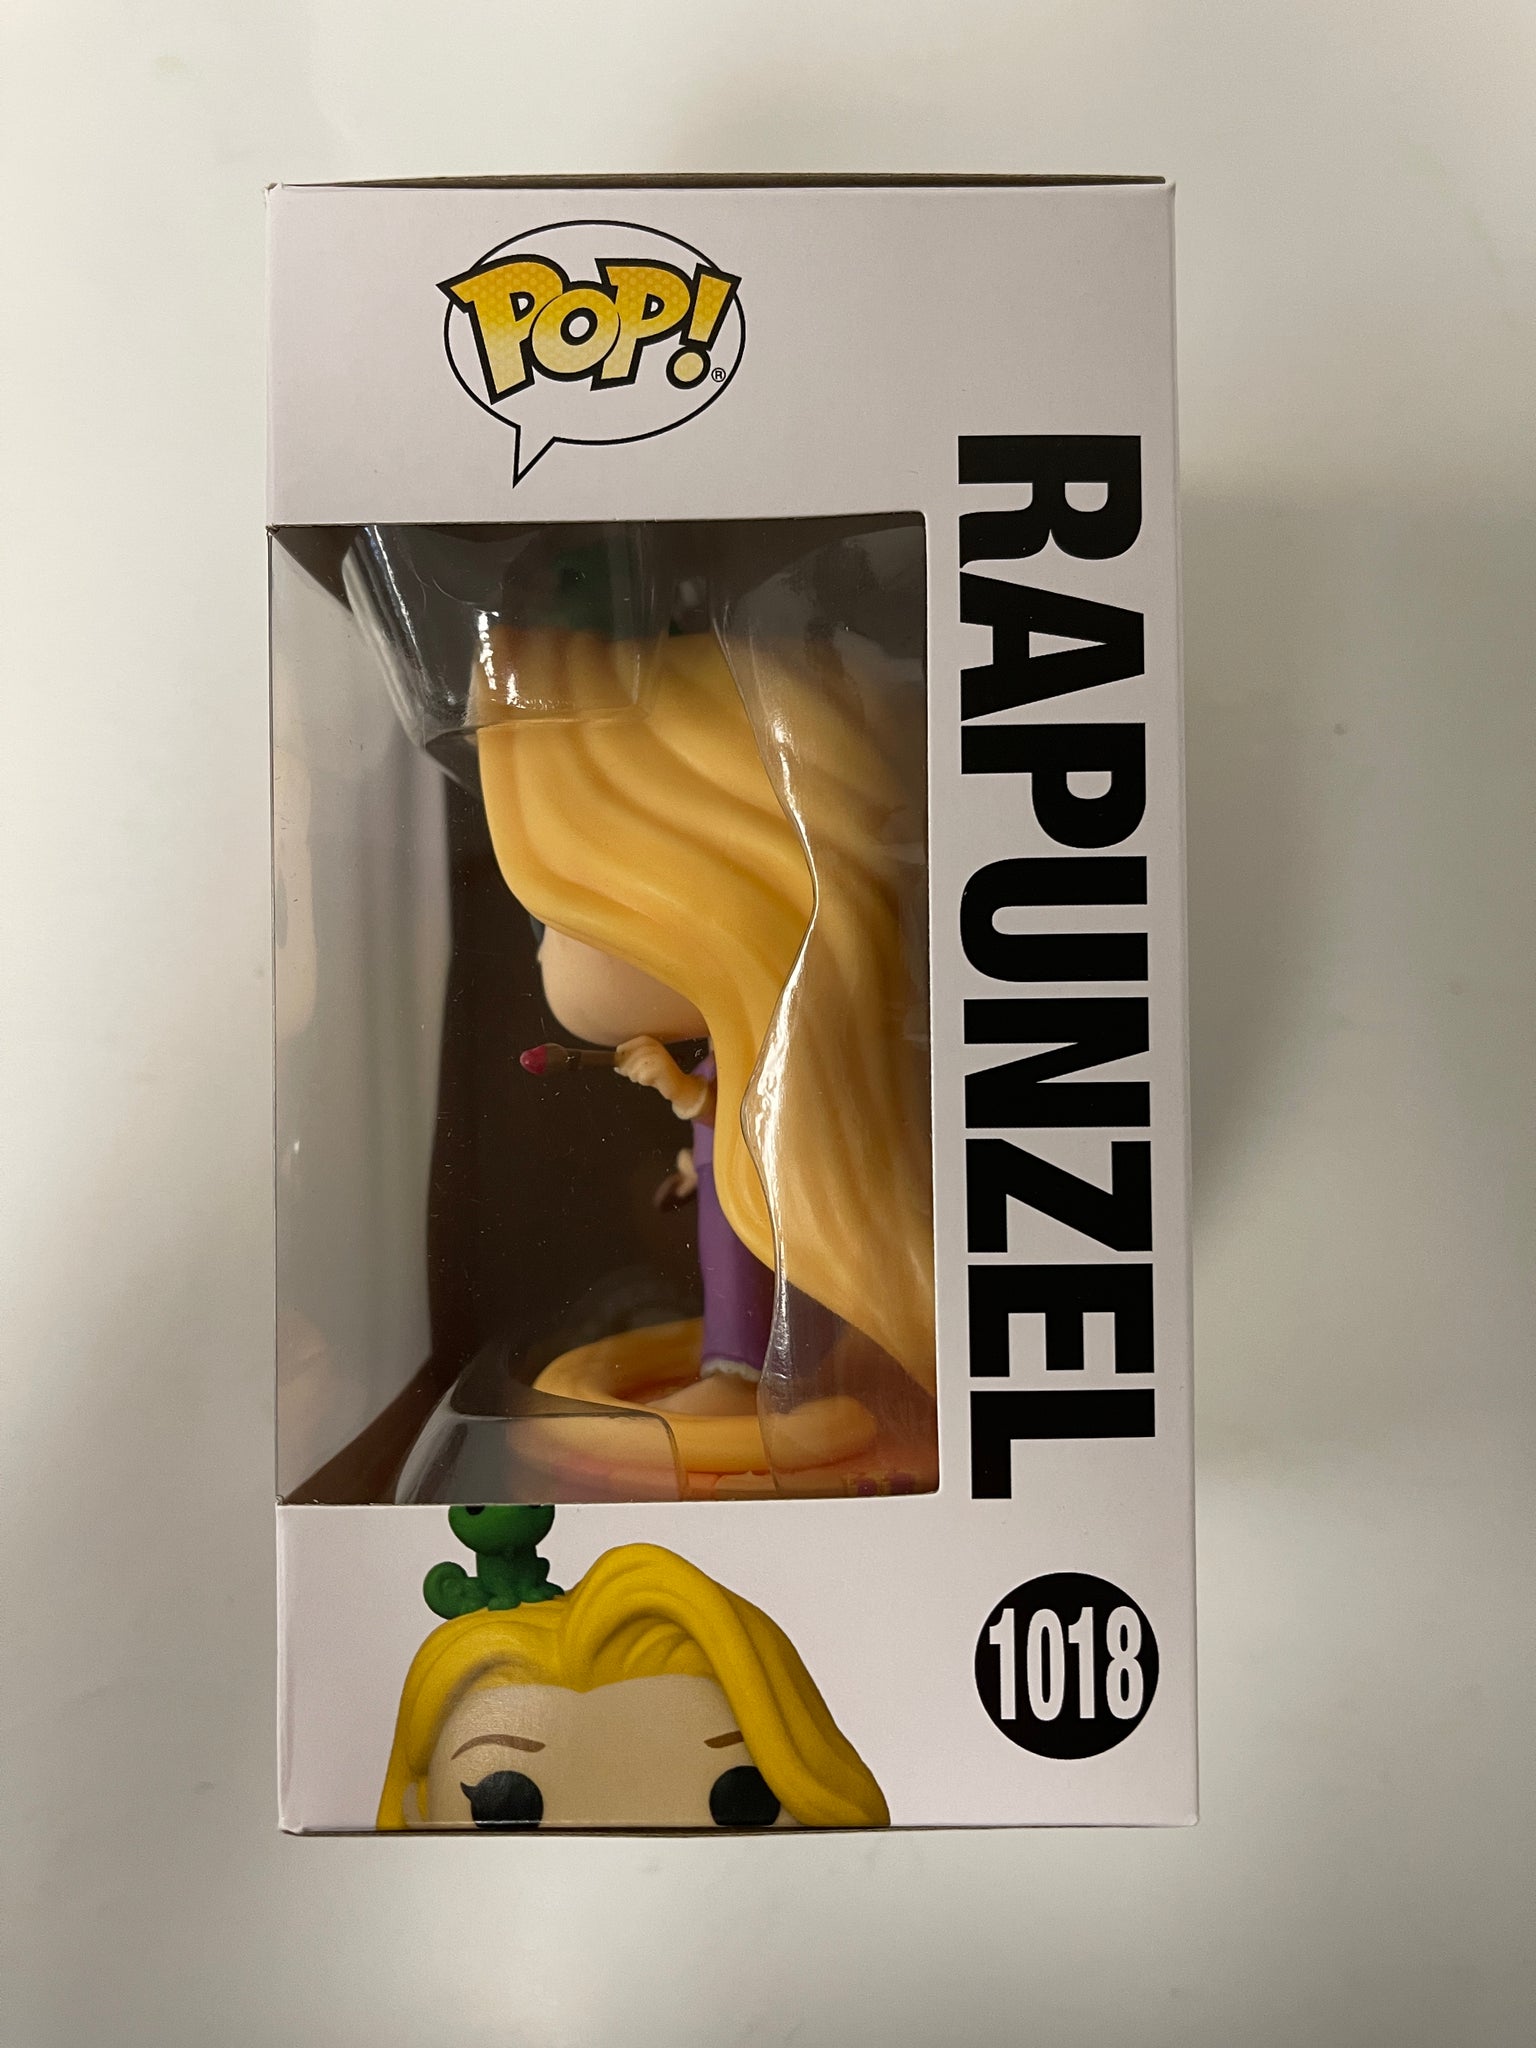 Figurine POP! #1018 - Disney Princess - Raiponce - Figurines